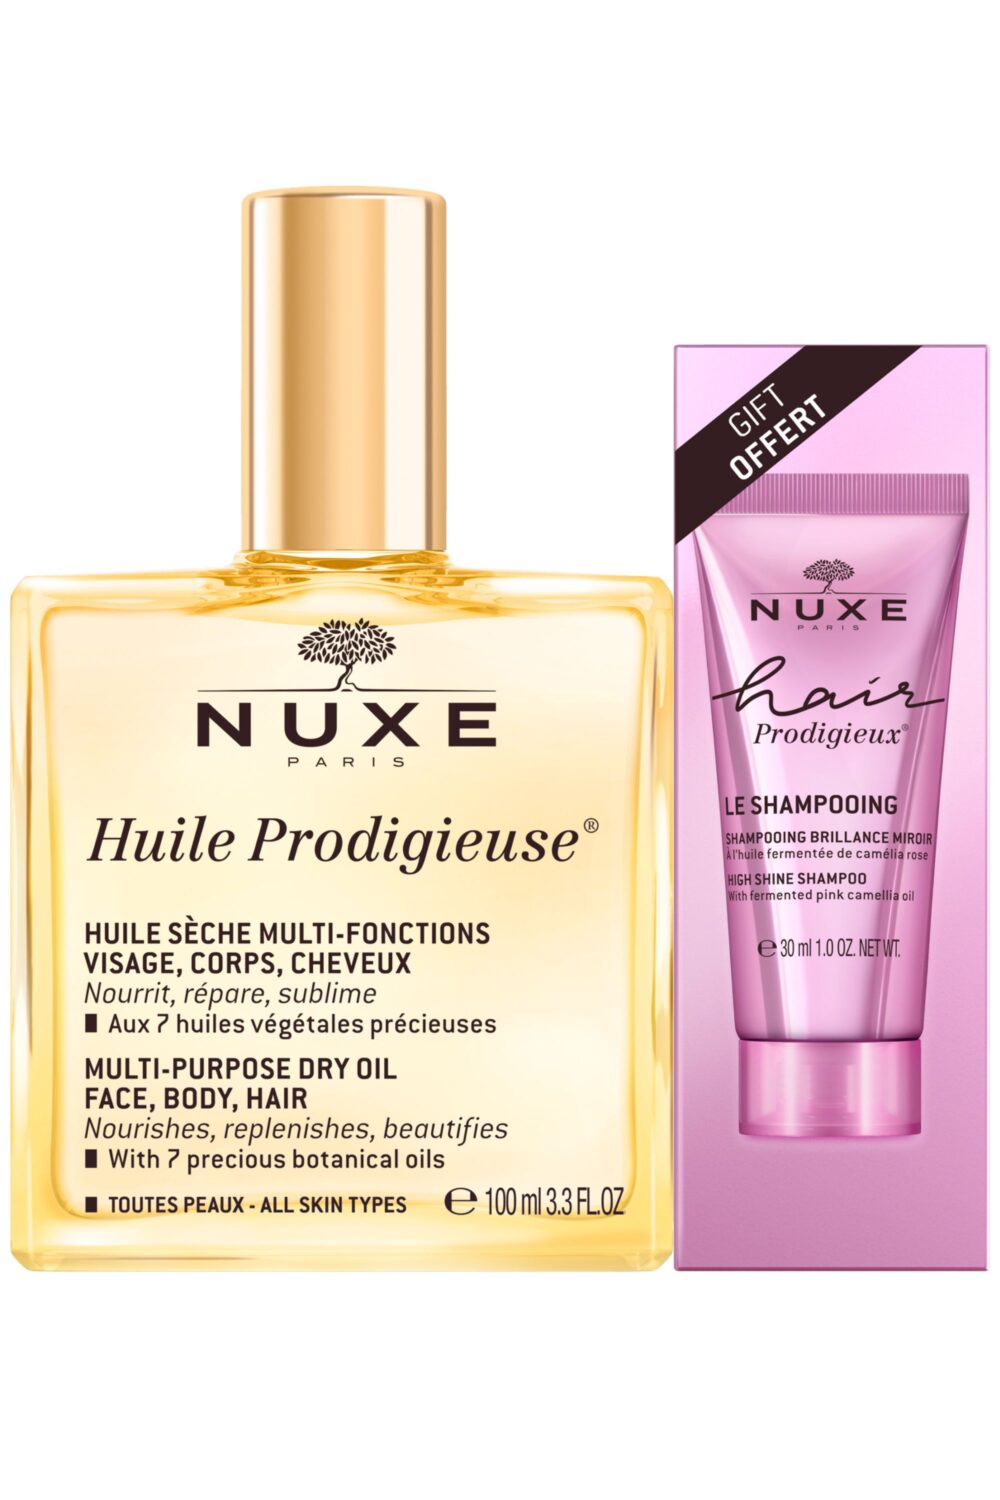 Nuxe - Duo Huile Prodigieuse 100ml & shampoing Hair Prodigieux 30ml offert​